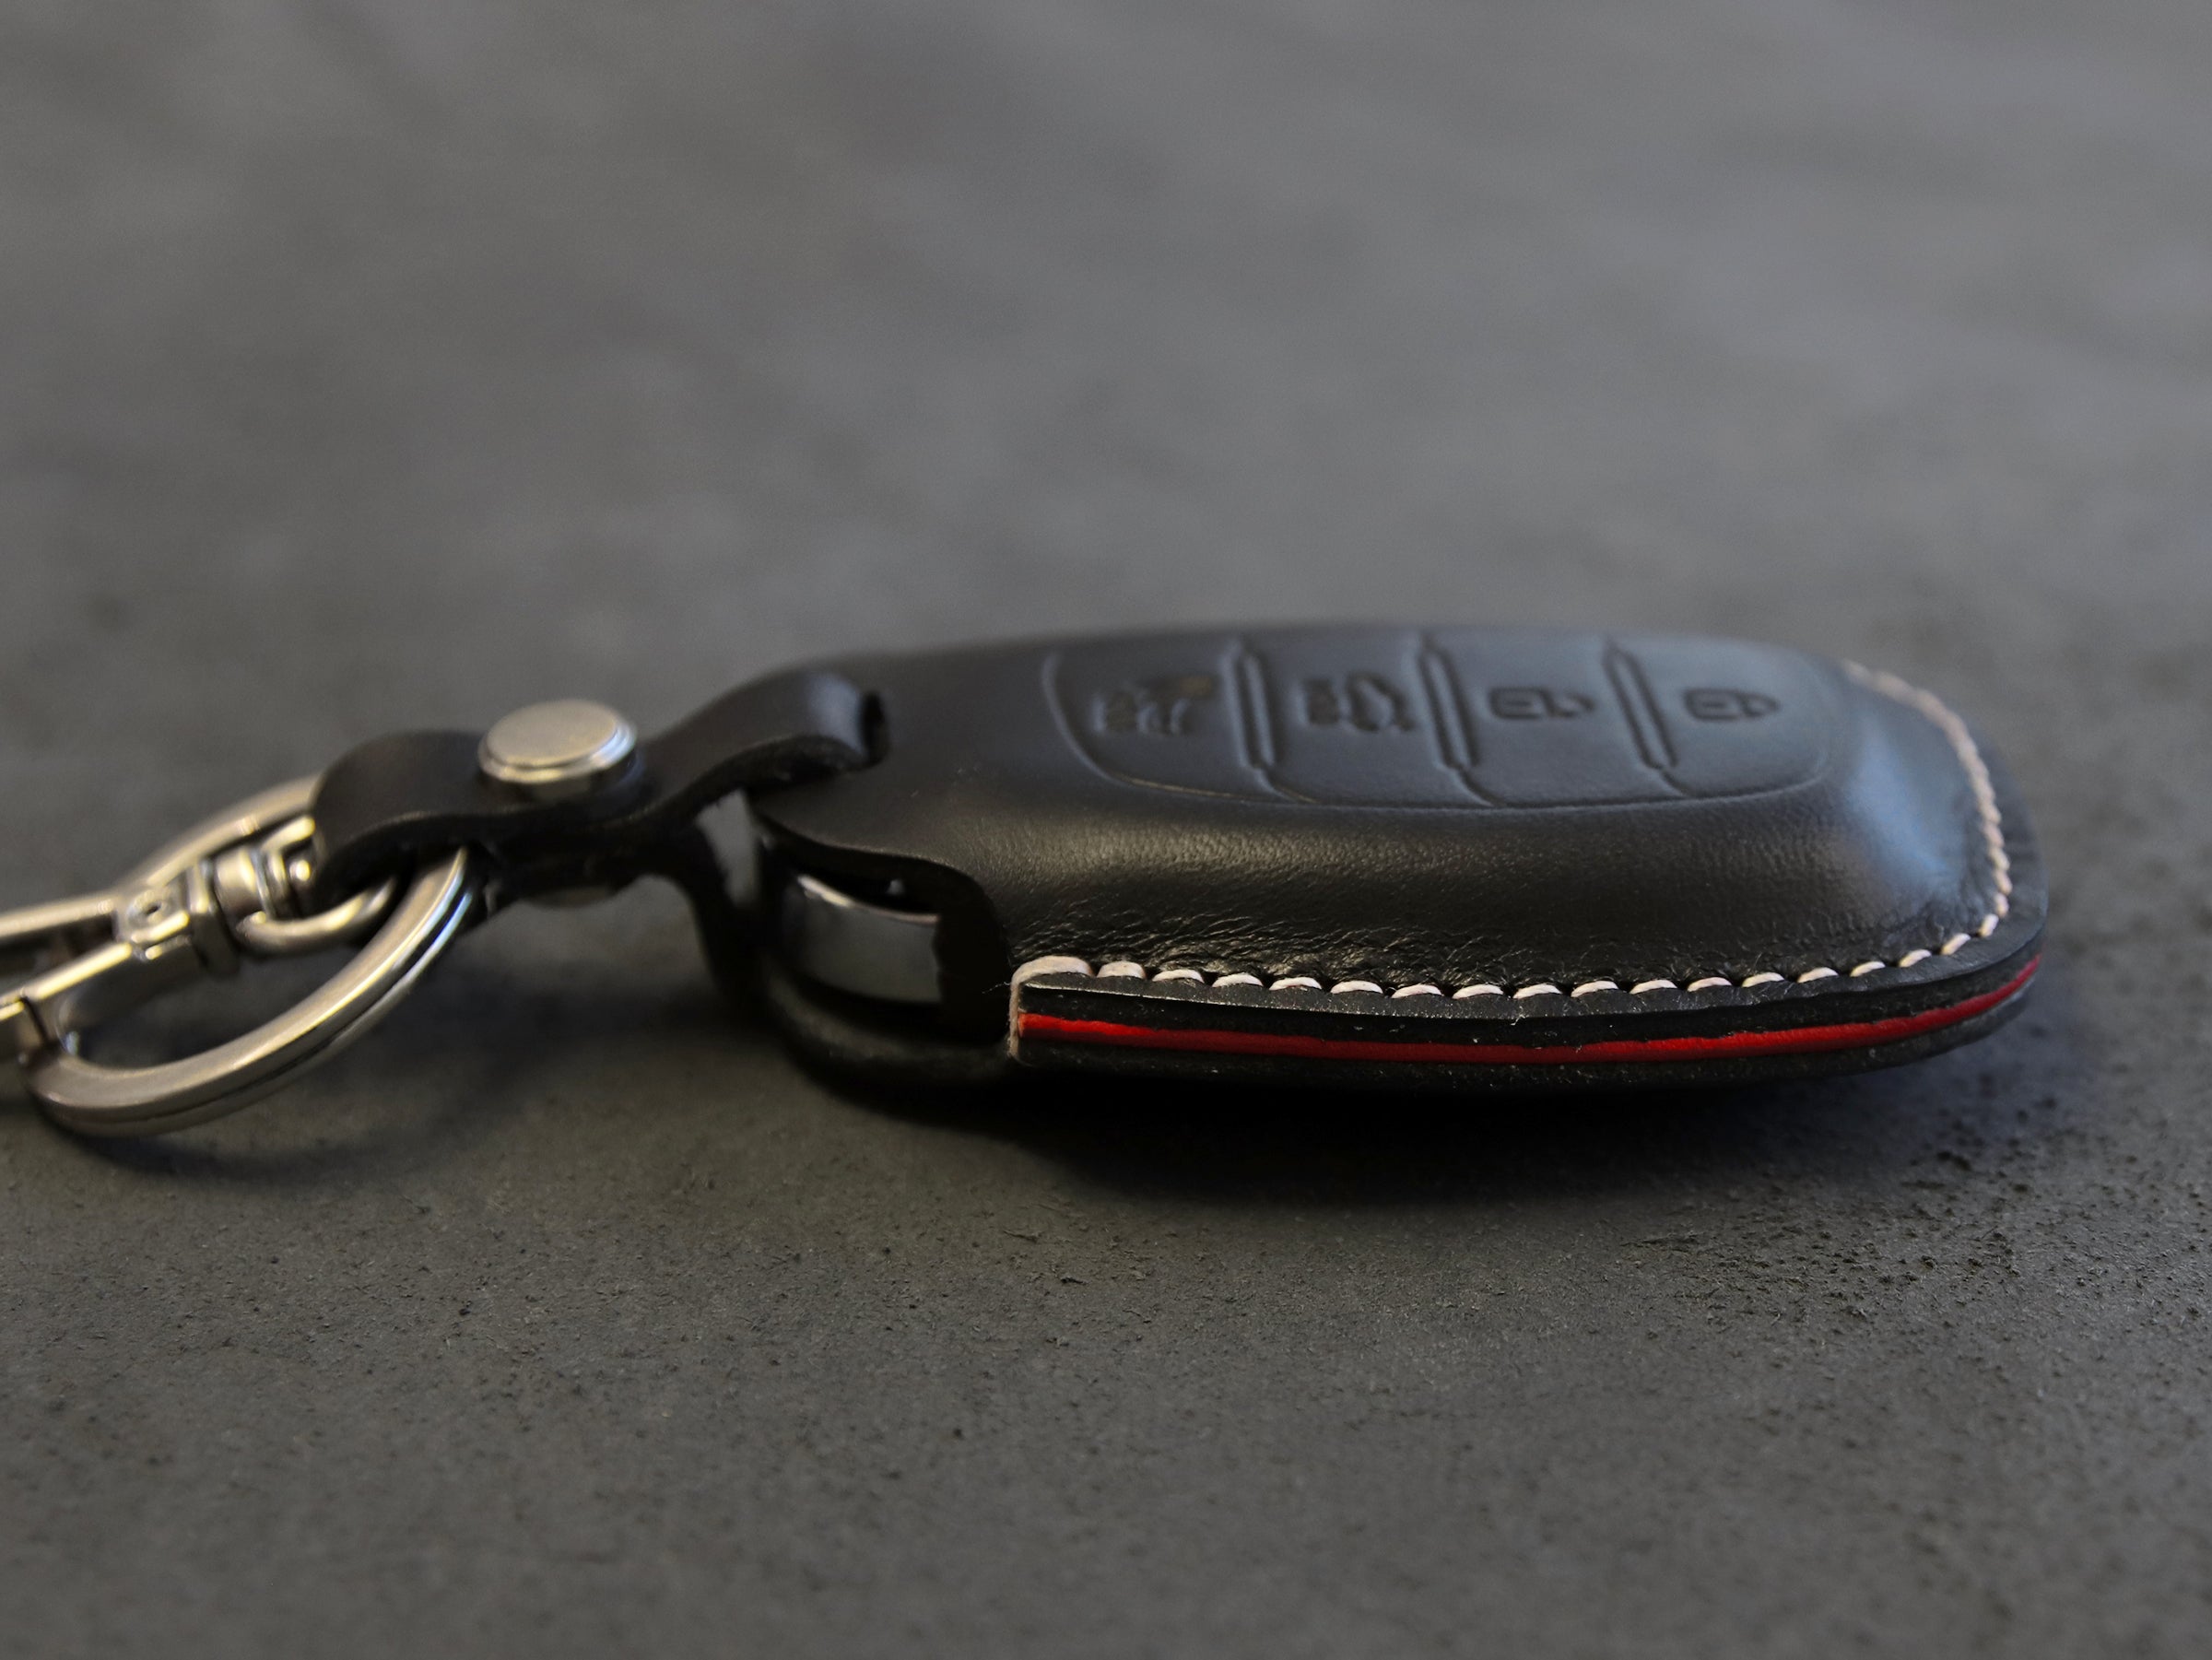 Hyundai [2-4] Key fob Leather Cover - Tucson Elantra Sonata Santa fe –  Leather Brut